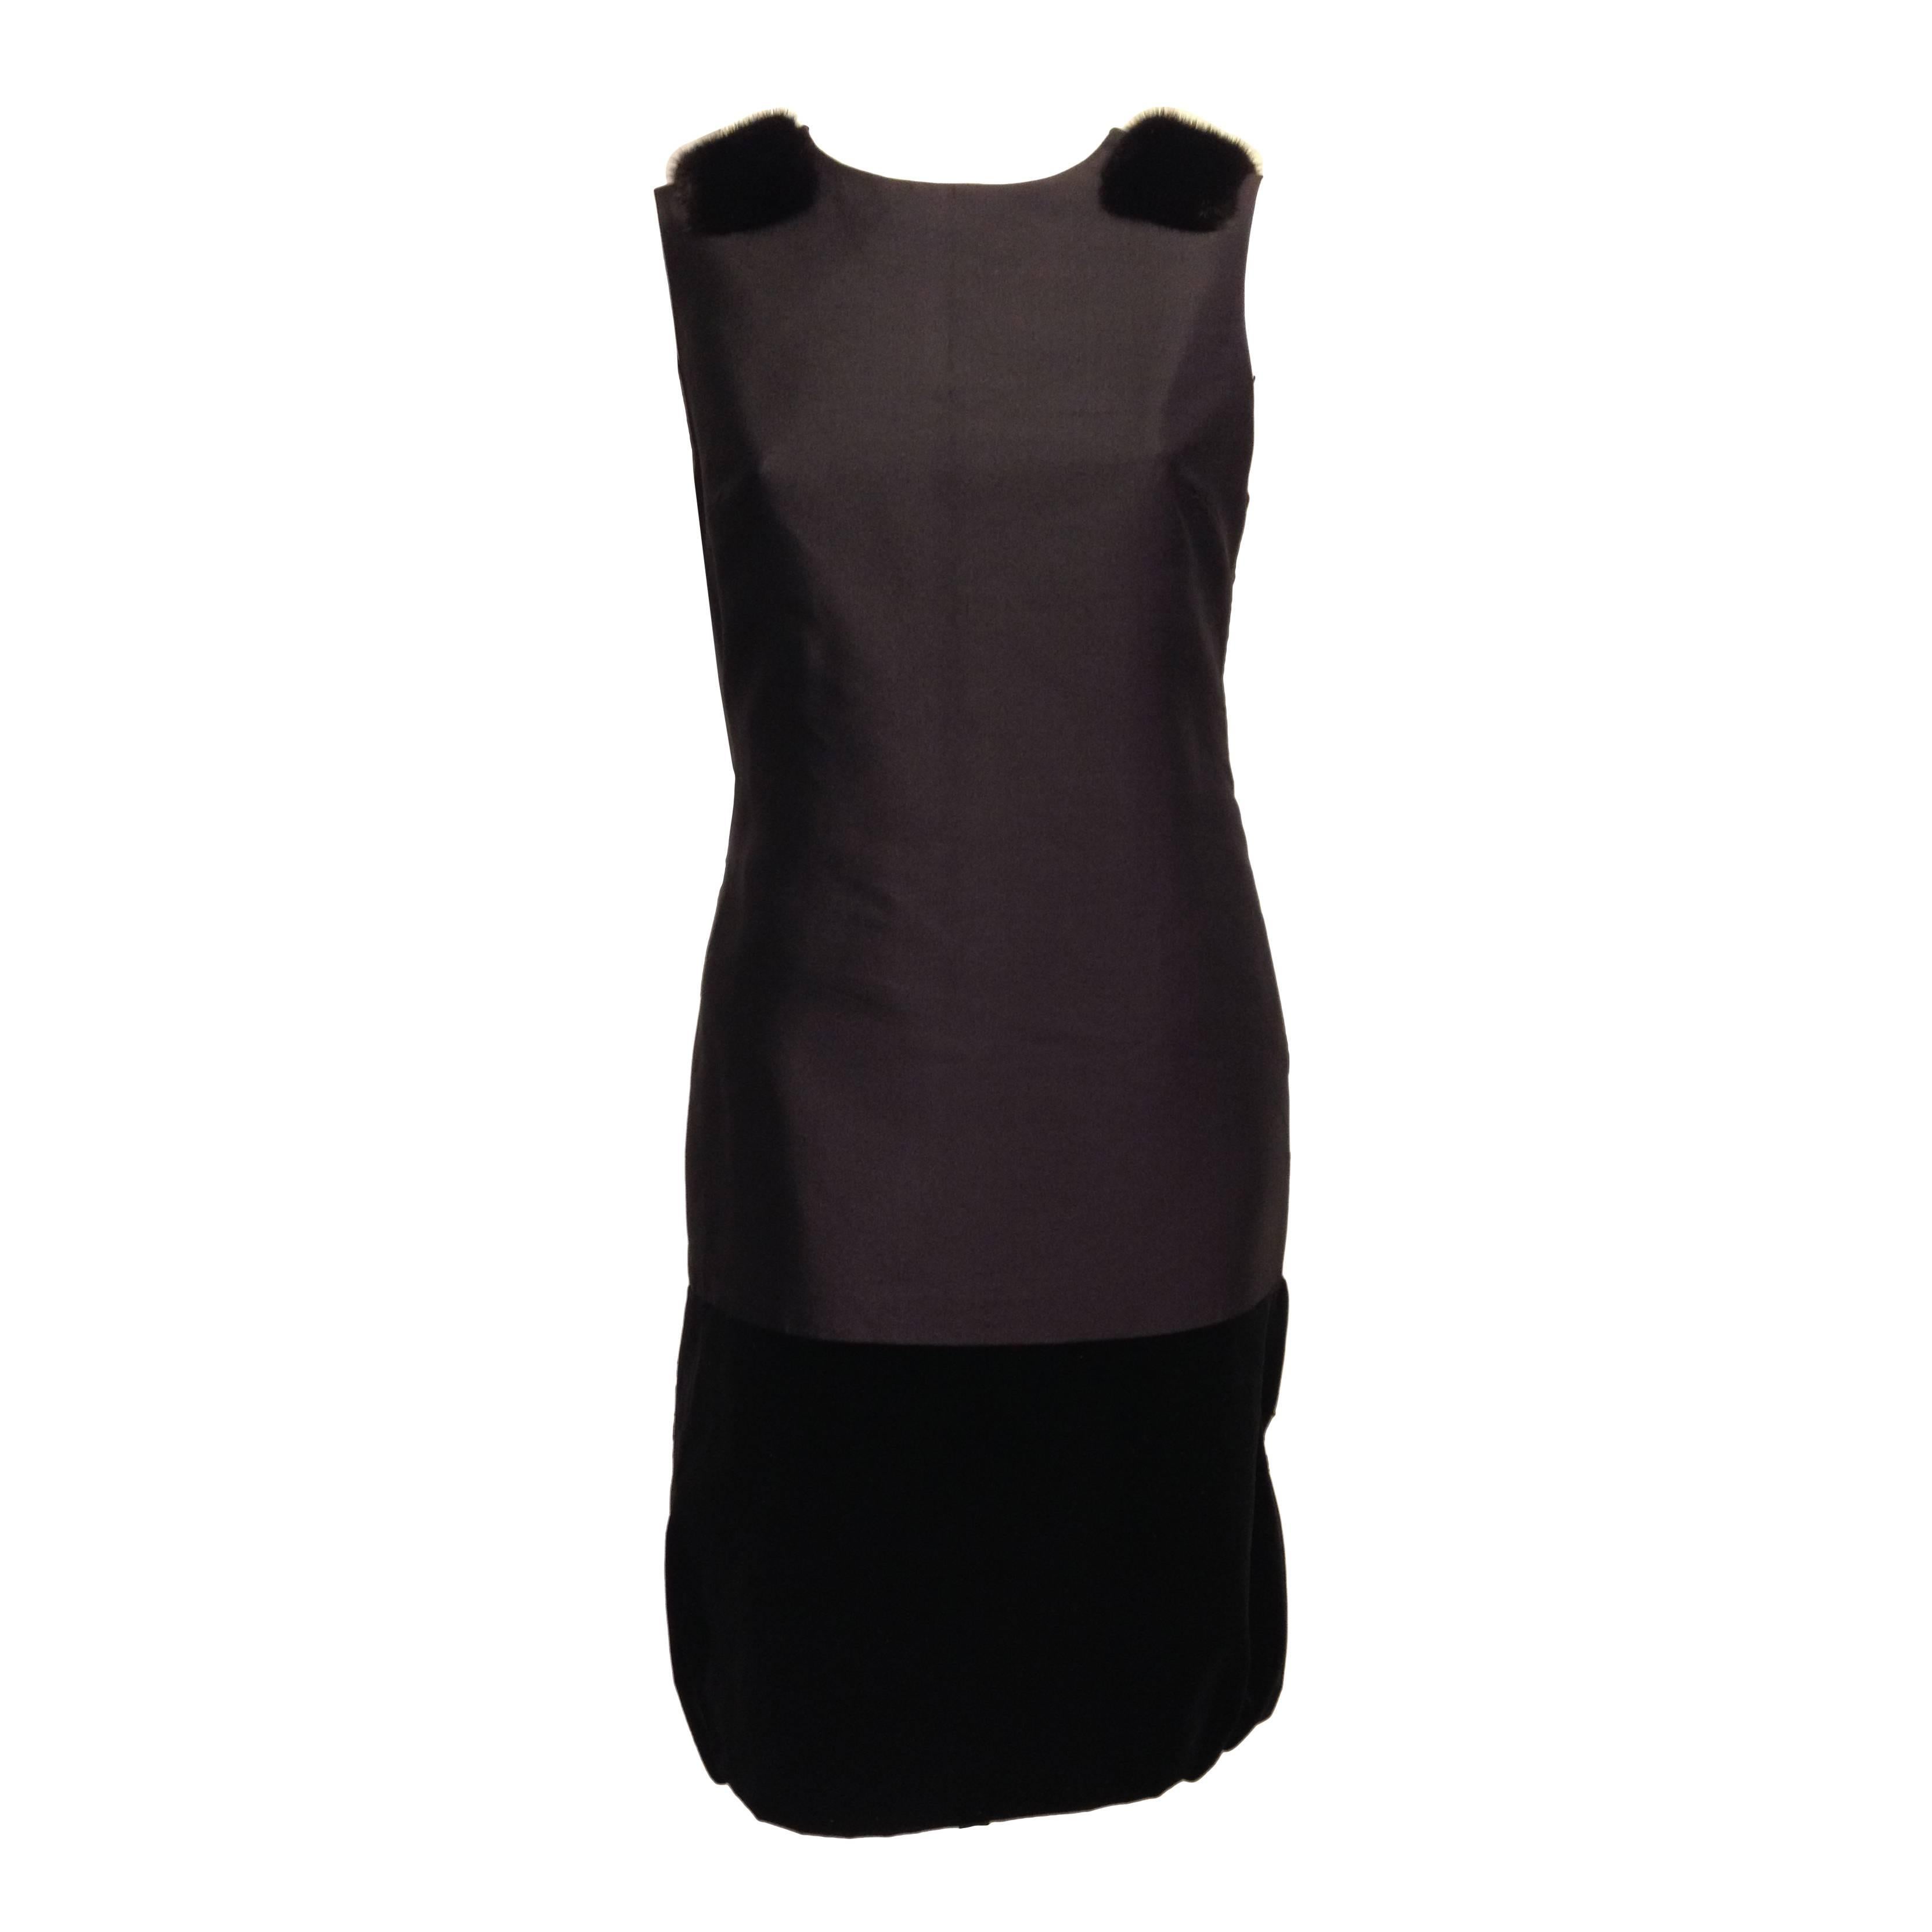 J. Mendel Black Silk Dress with Fur Epaulettes Size 10